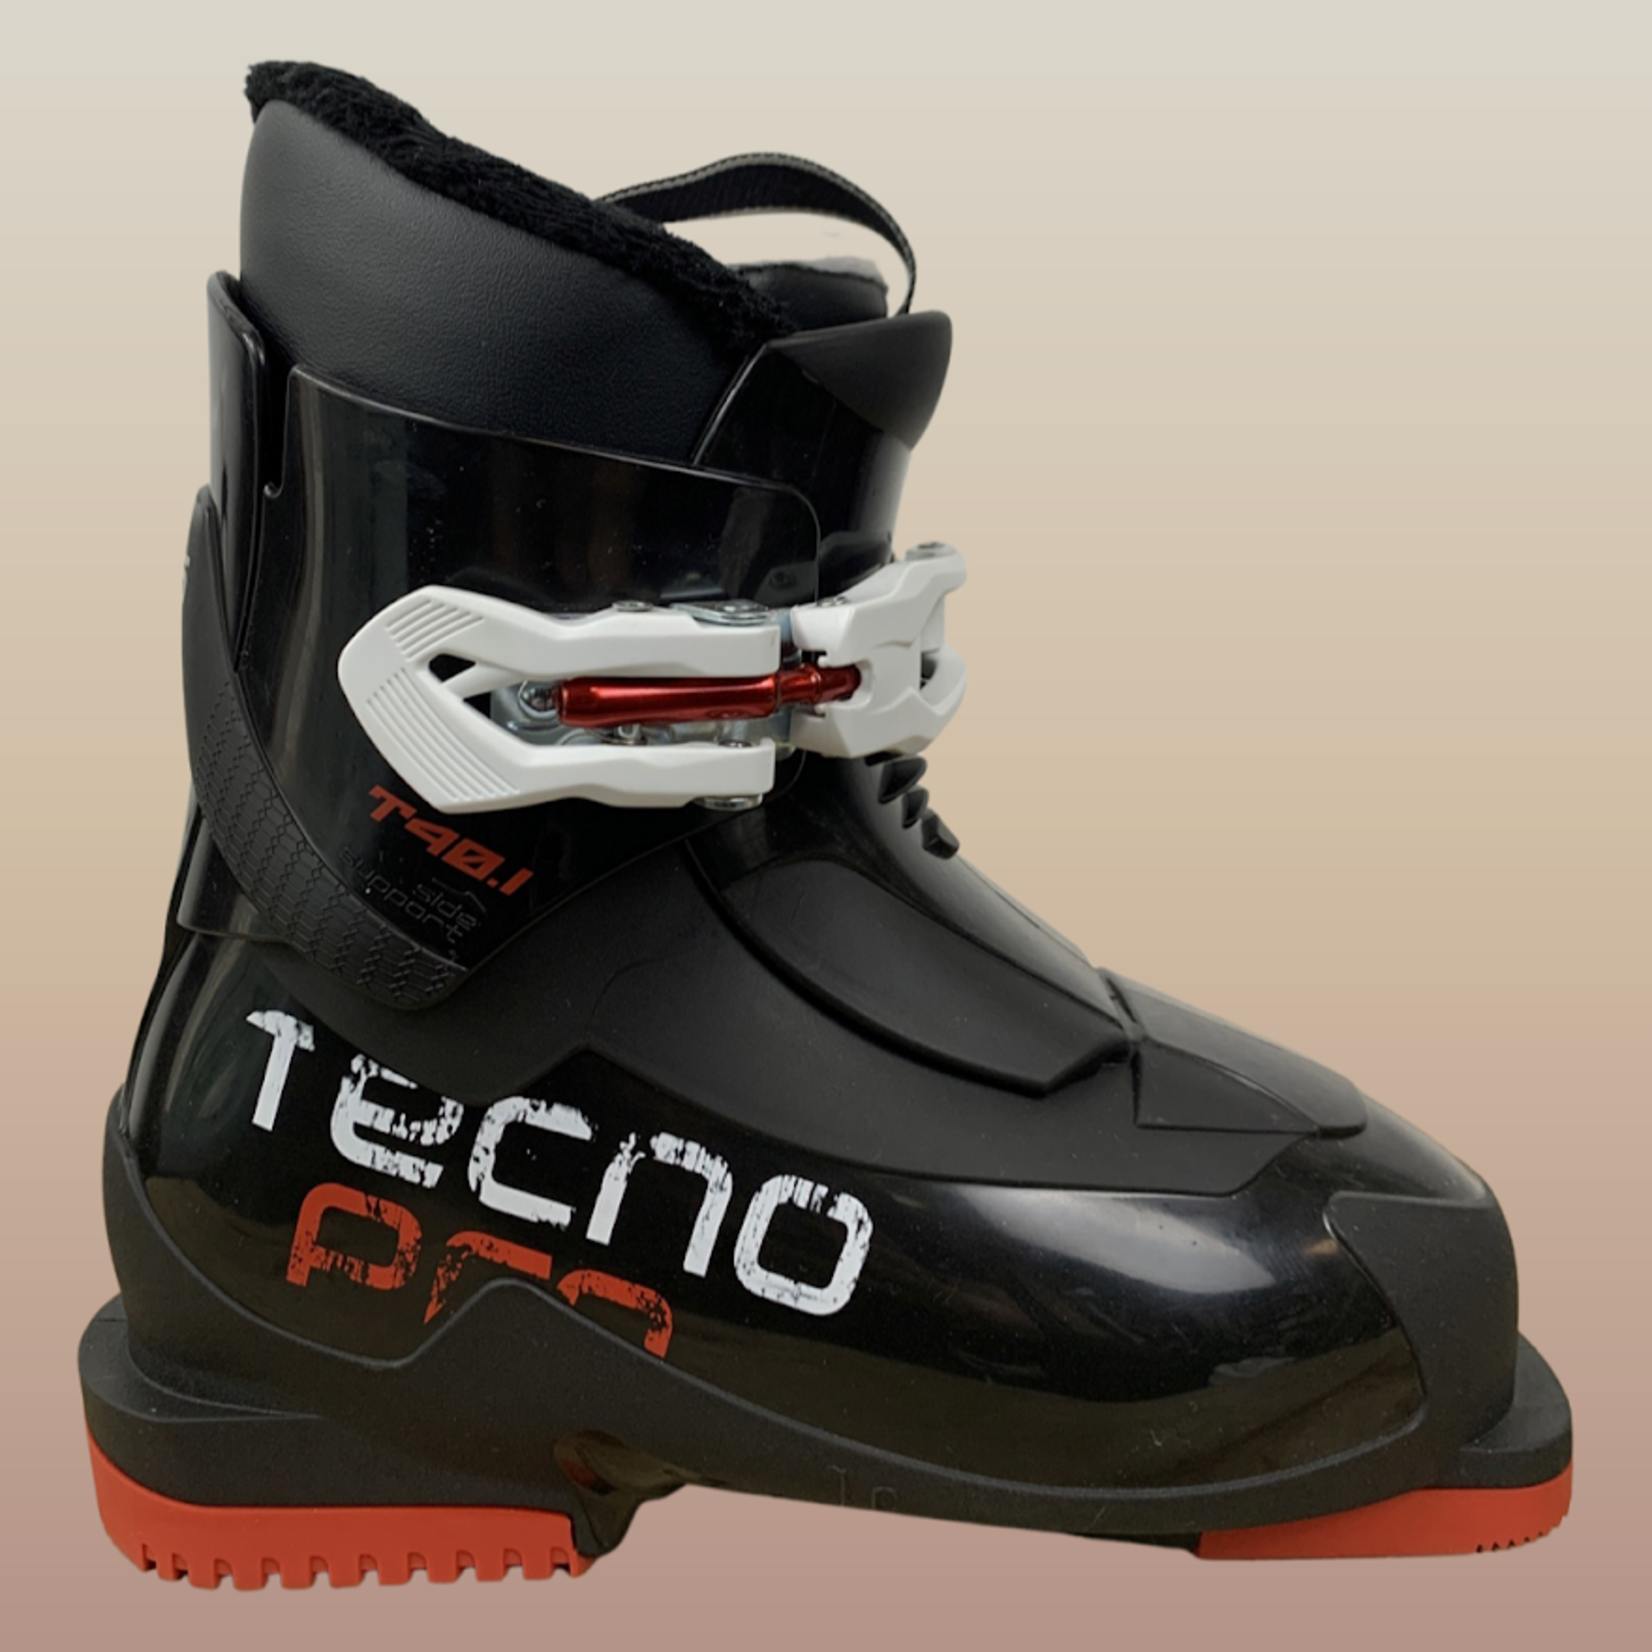 NEW 2021 TecnoPro Kids Ski Boots, Size 15